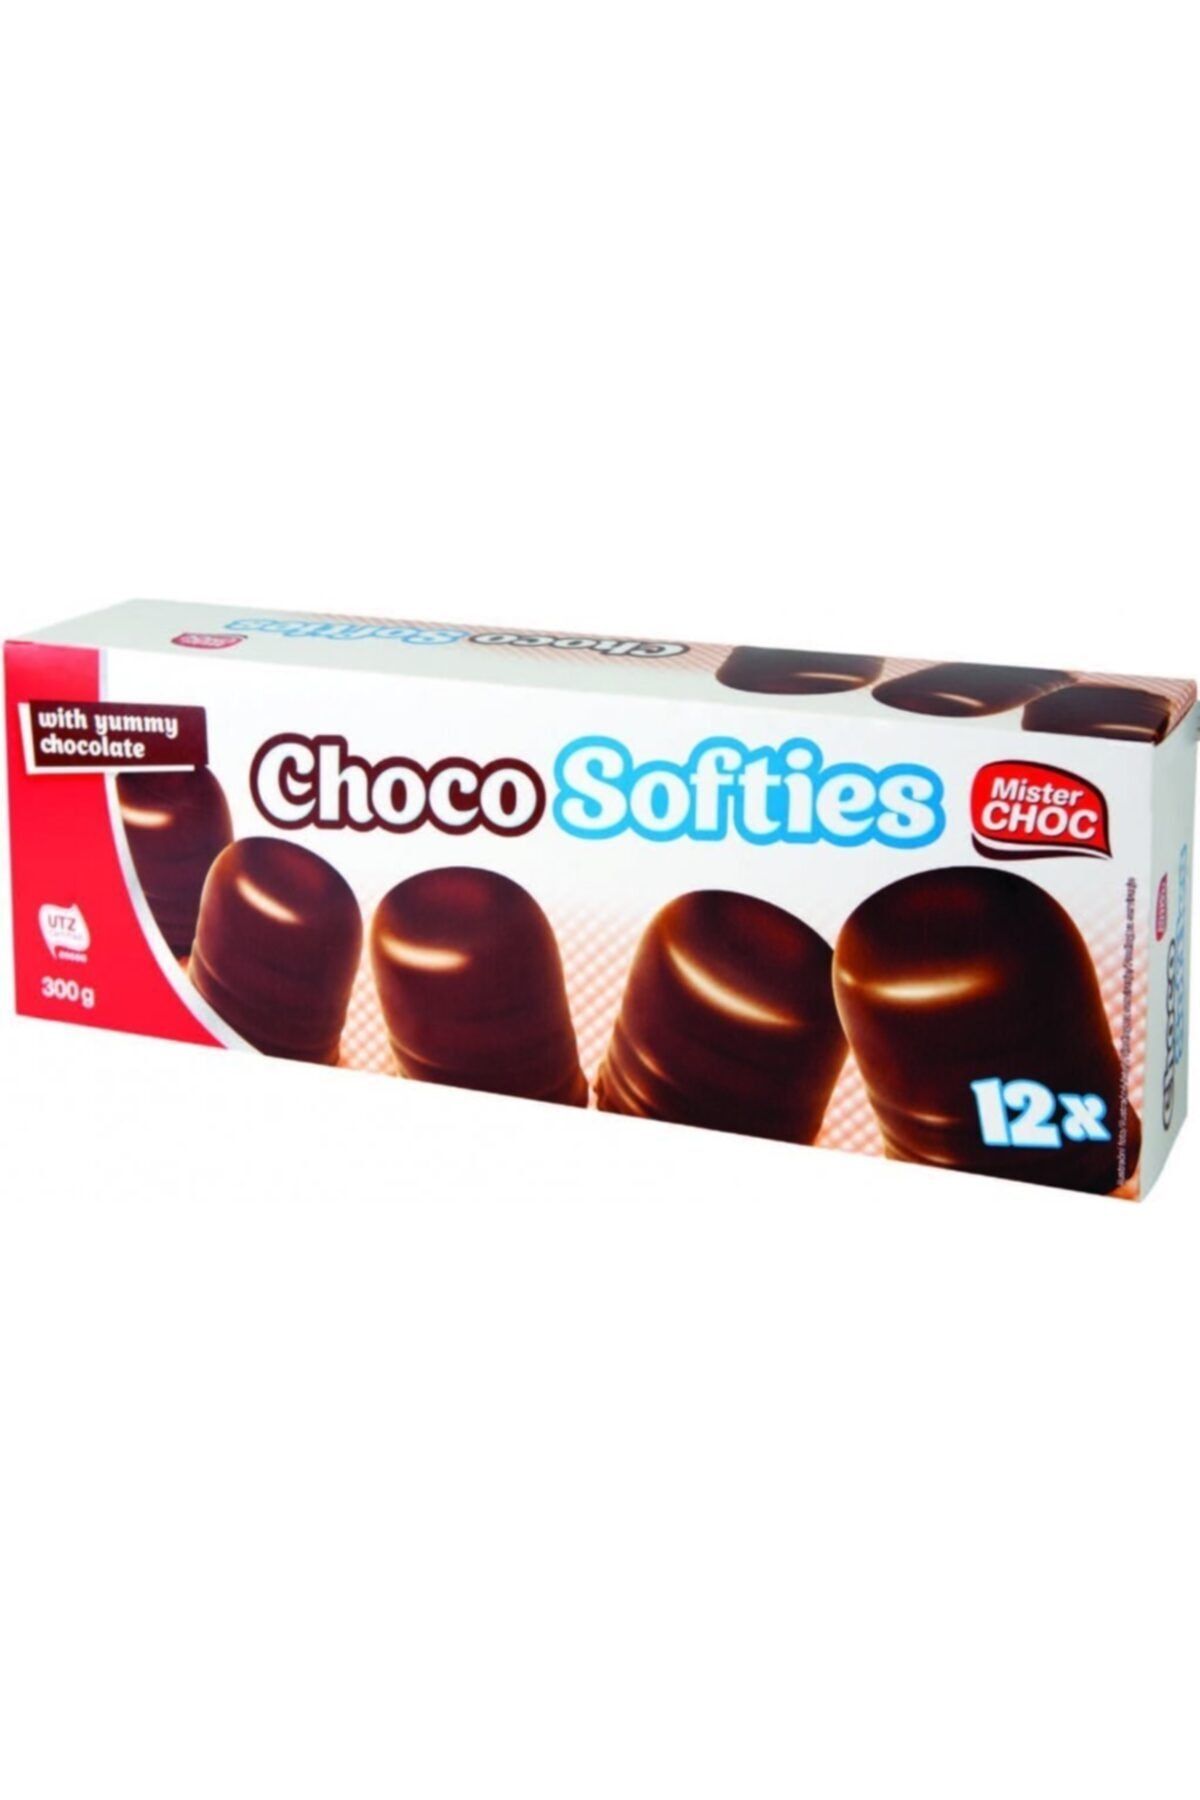 Nestle Mister Choc 12x Choco Softies 300gr